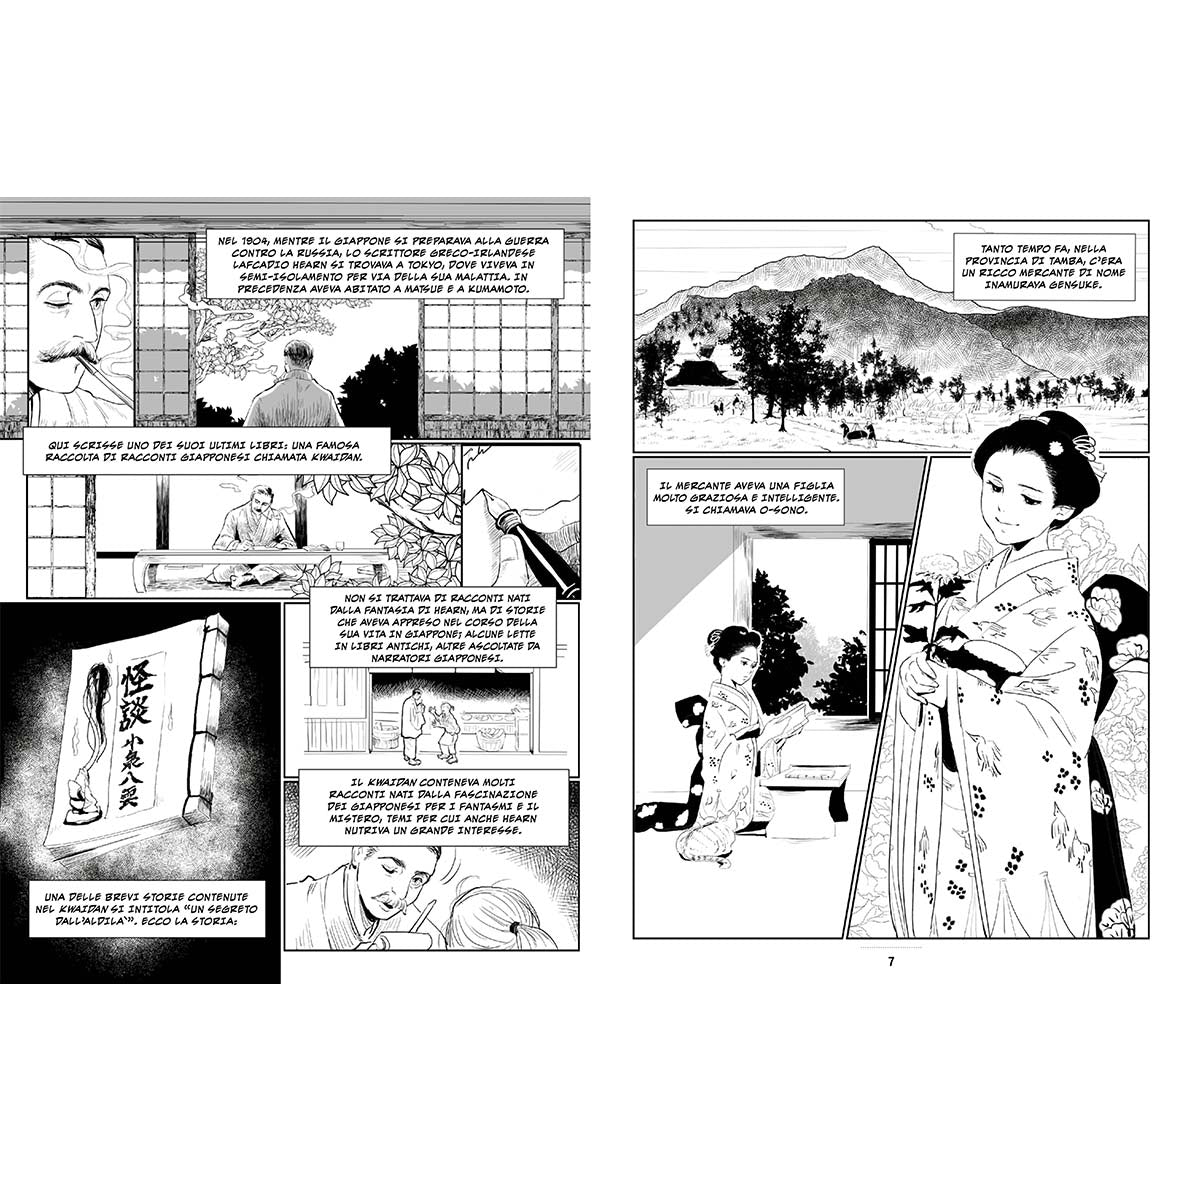 Manga - Yōkai stories. Japanese spirit tales